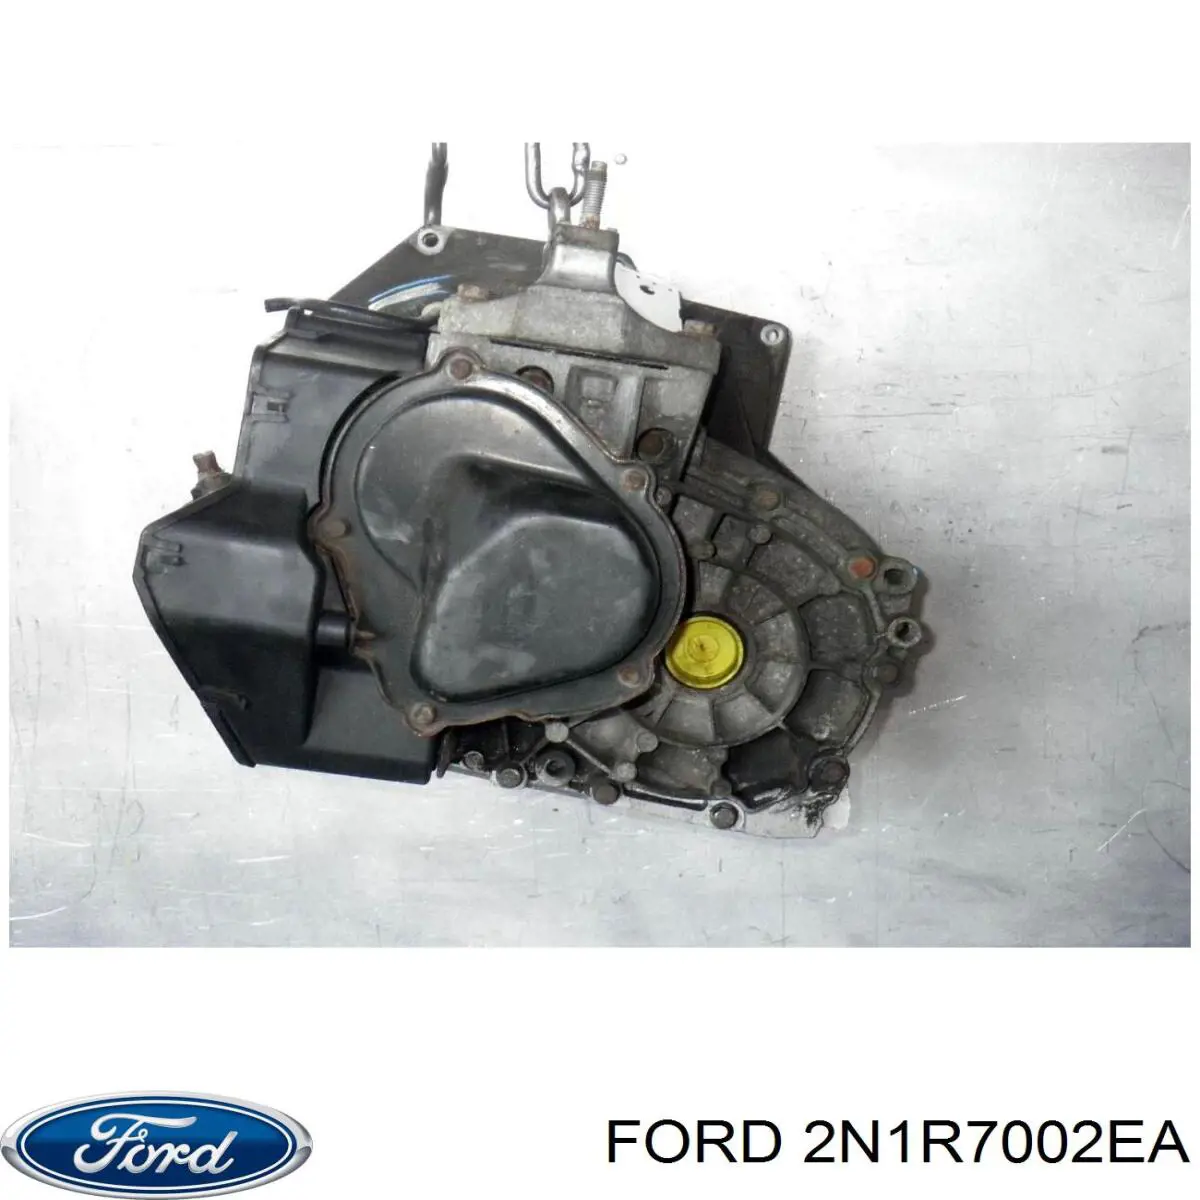 2N1R7002EC Ford caja de cambios mecánica, completa